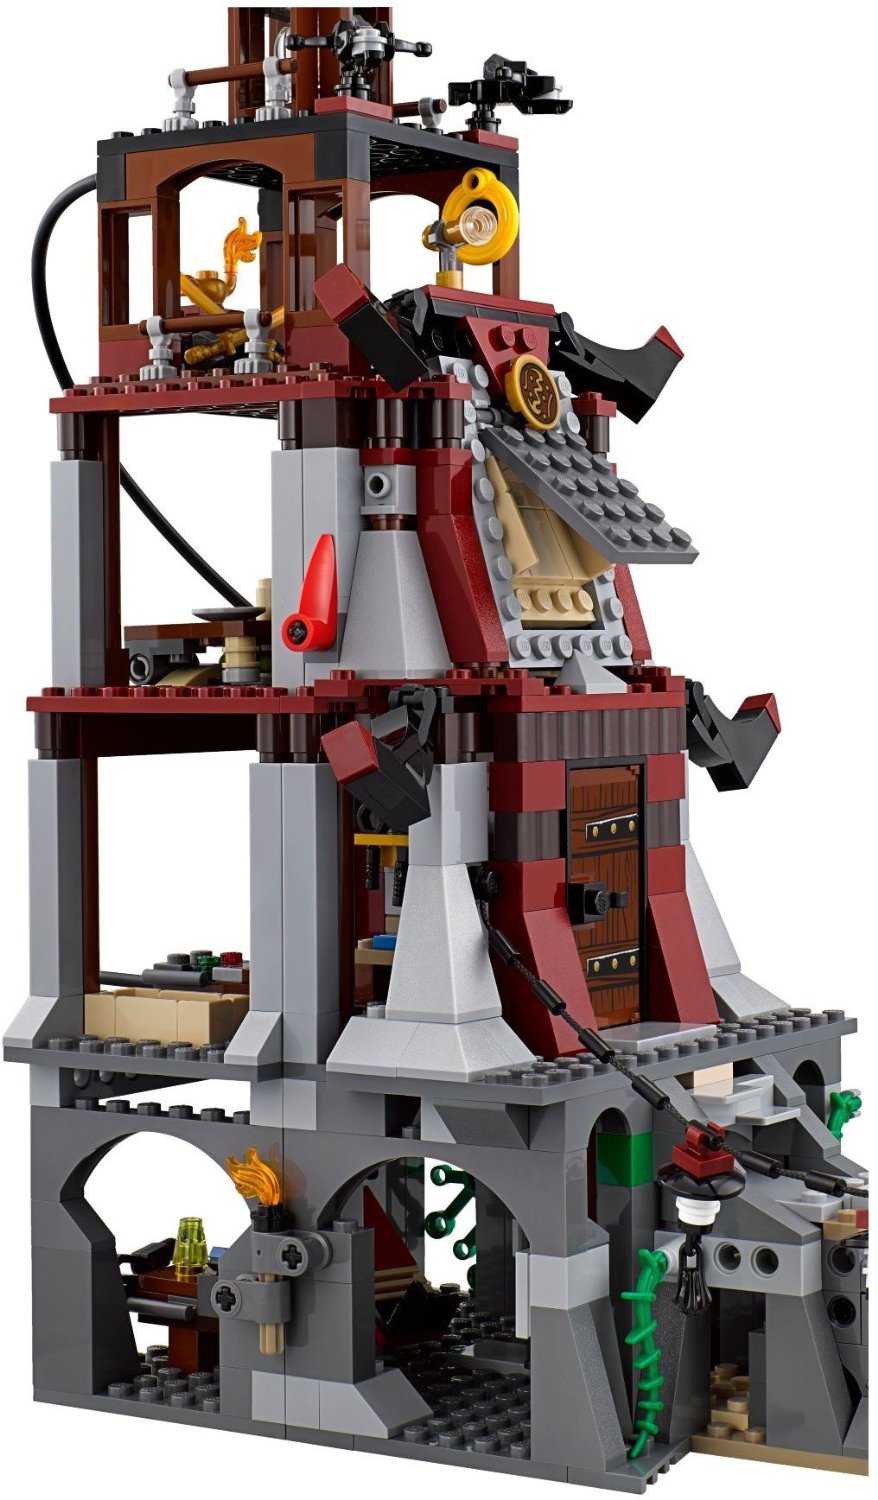 Lego Ninjago. Осада маяка  